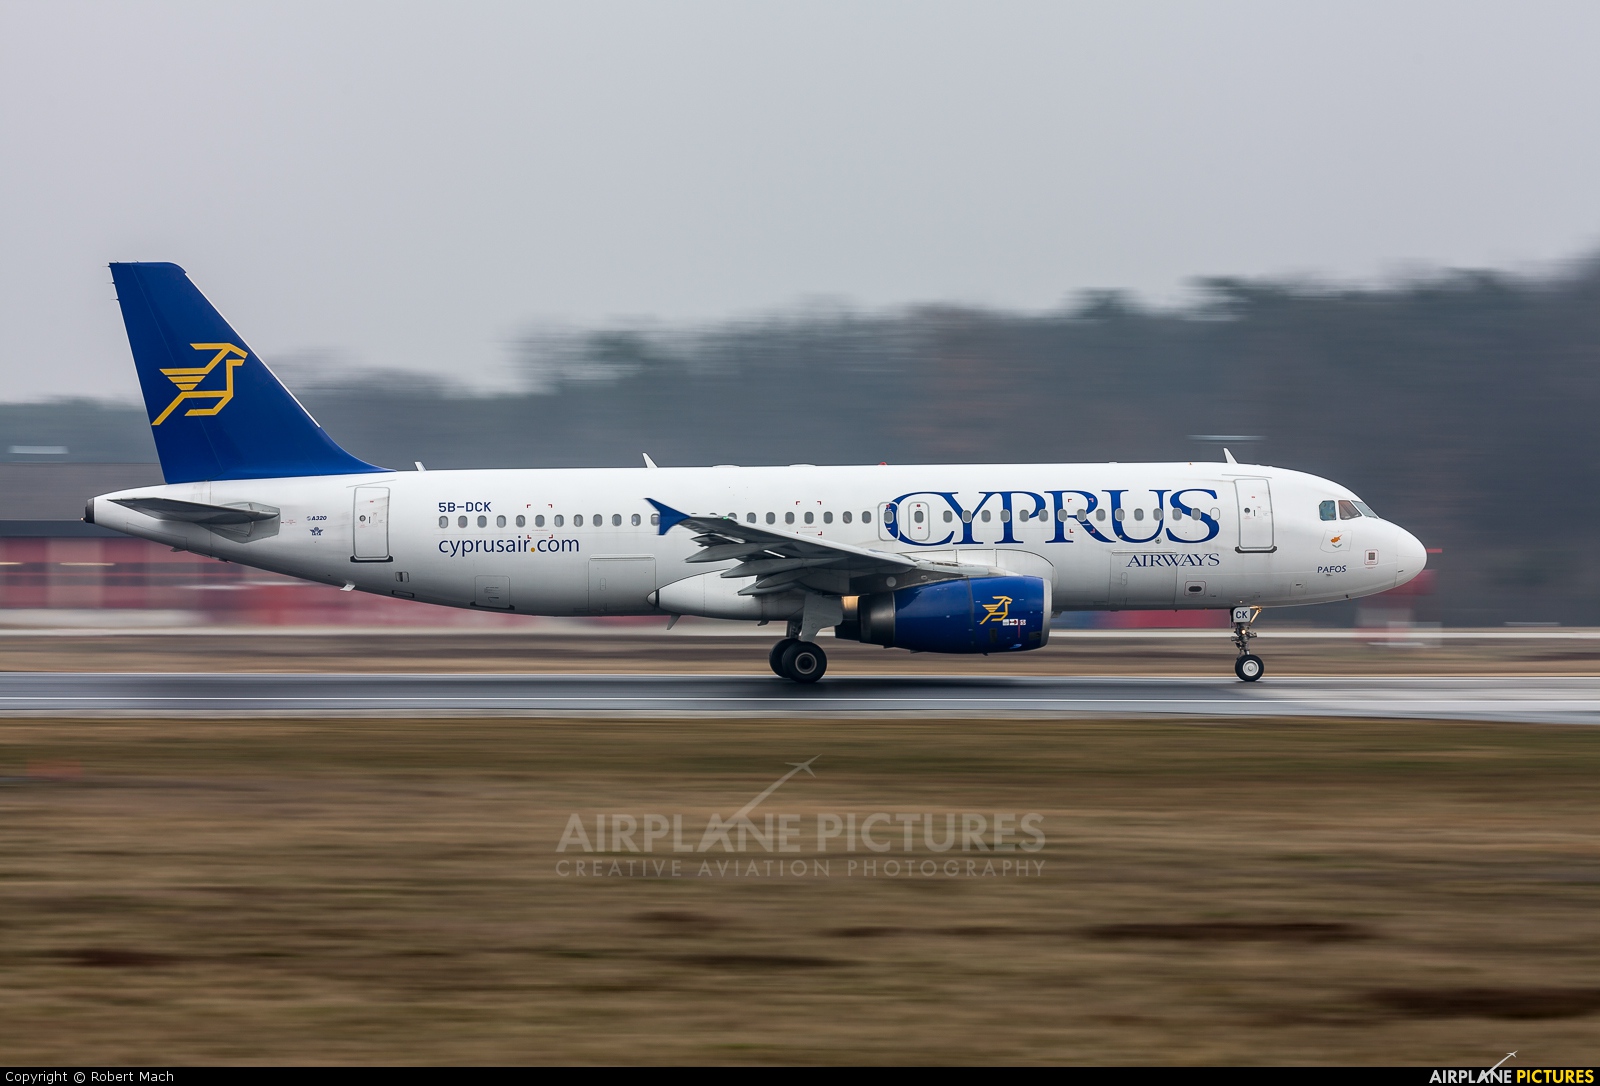 Cyprus Airways 5B-DCK aircraft at Frankfurt